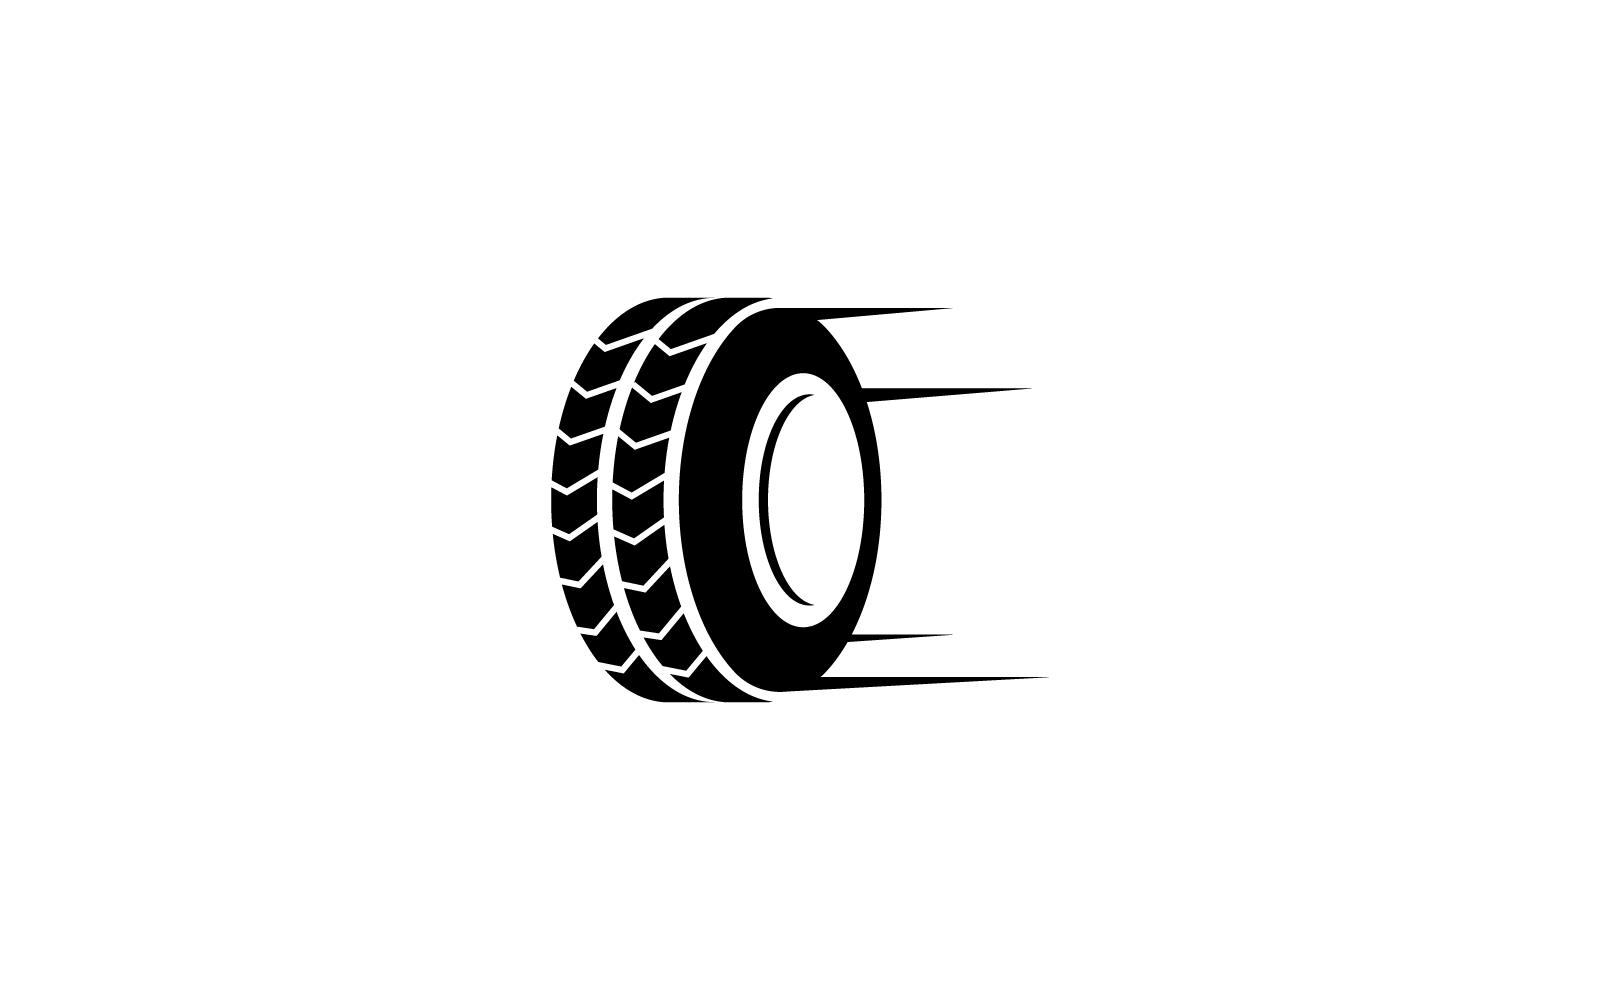 Tires illustration logo vector design template